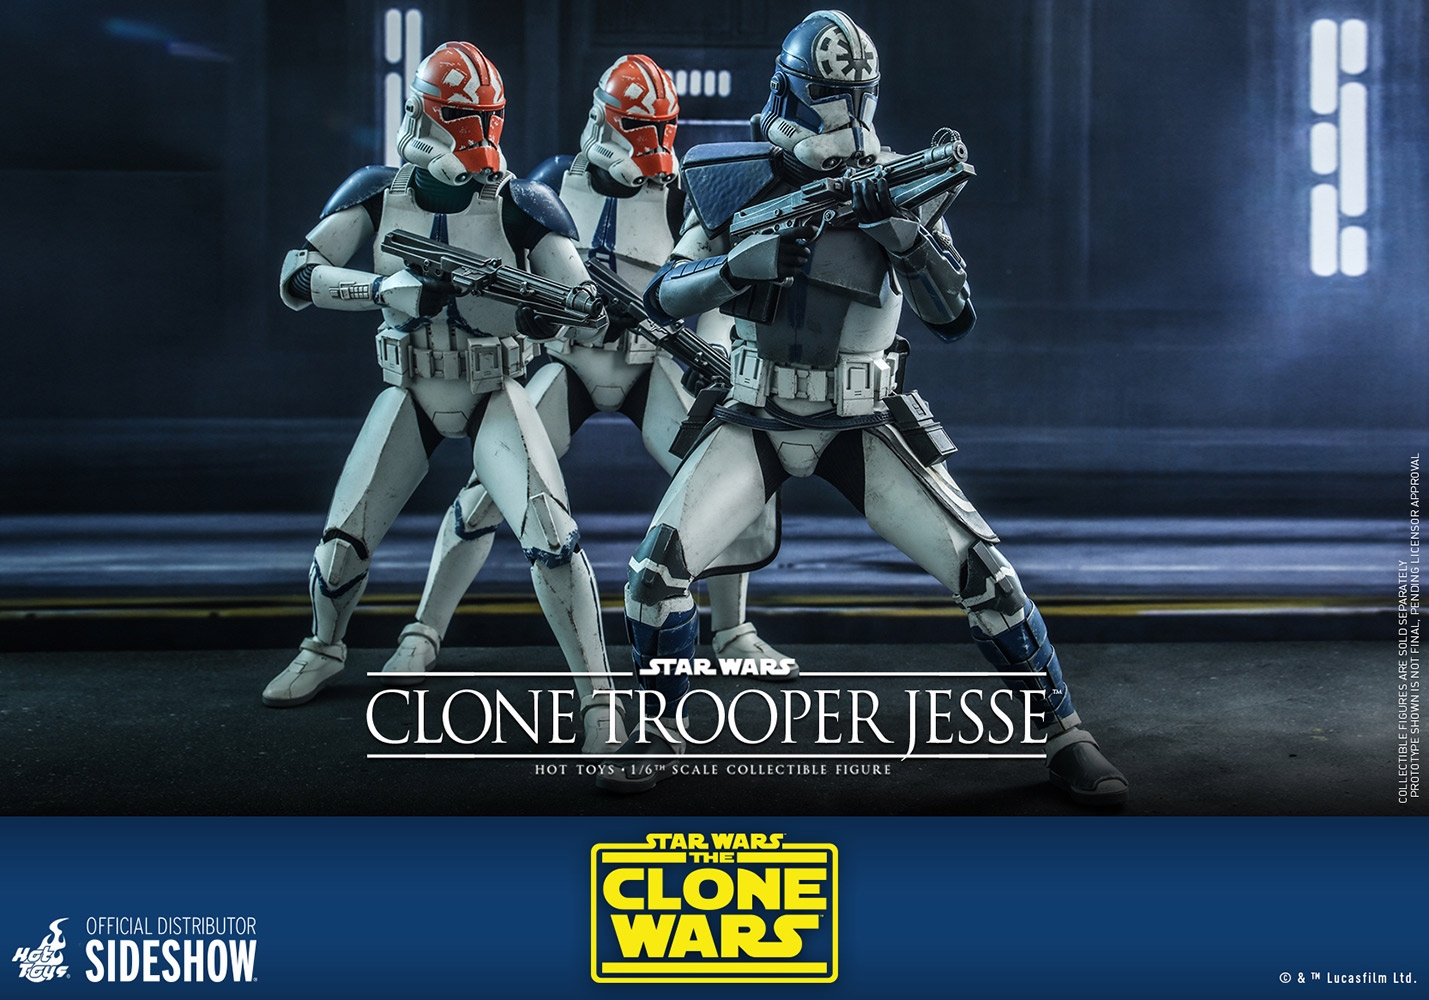 clone-trooper-jesse_star-wars_gallery_61855d961e039.jpg